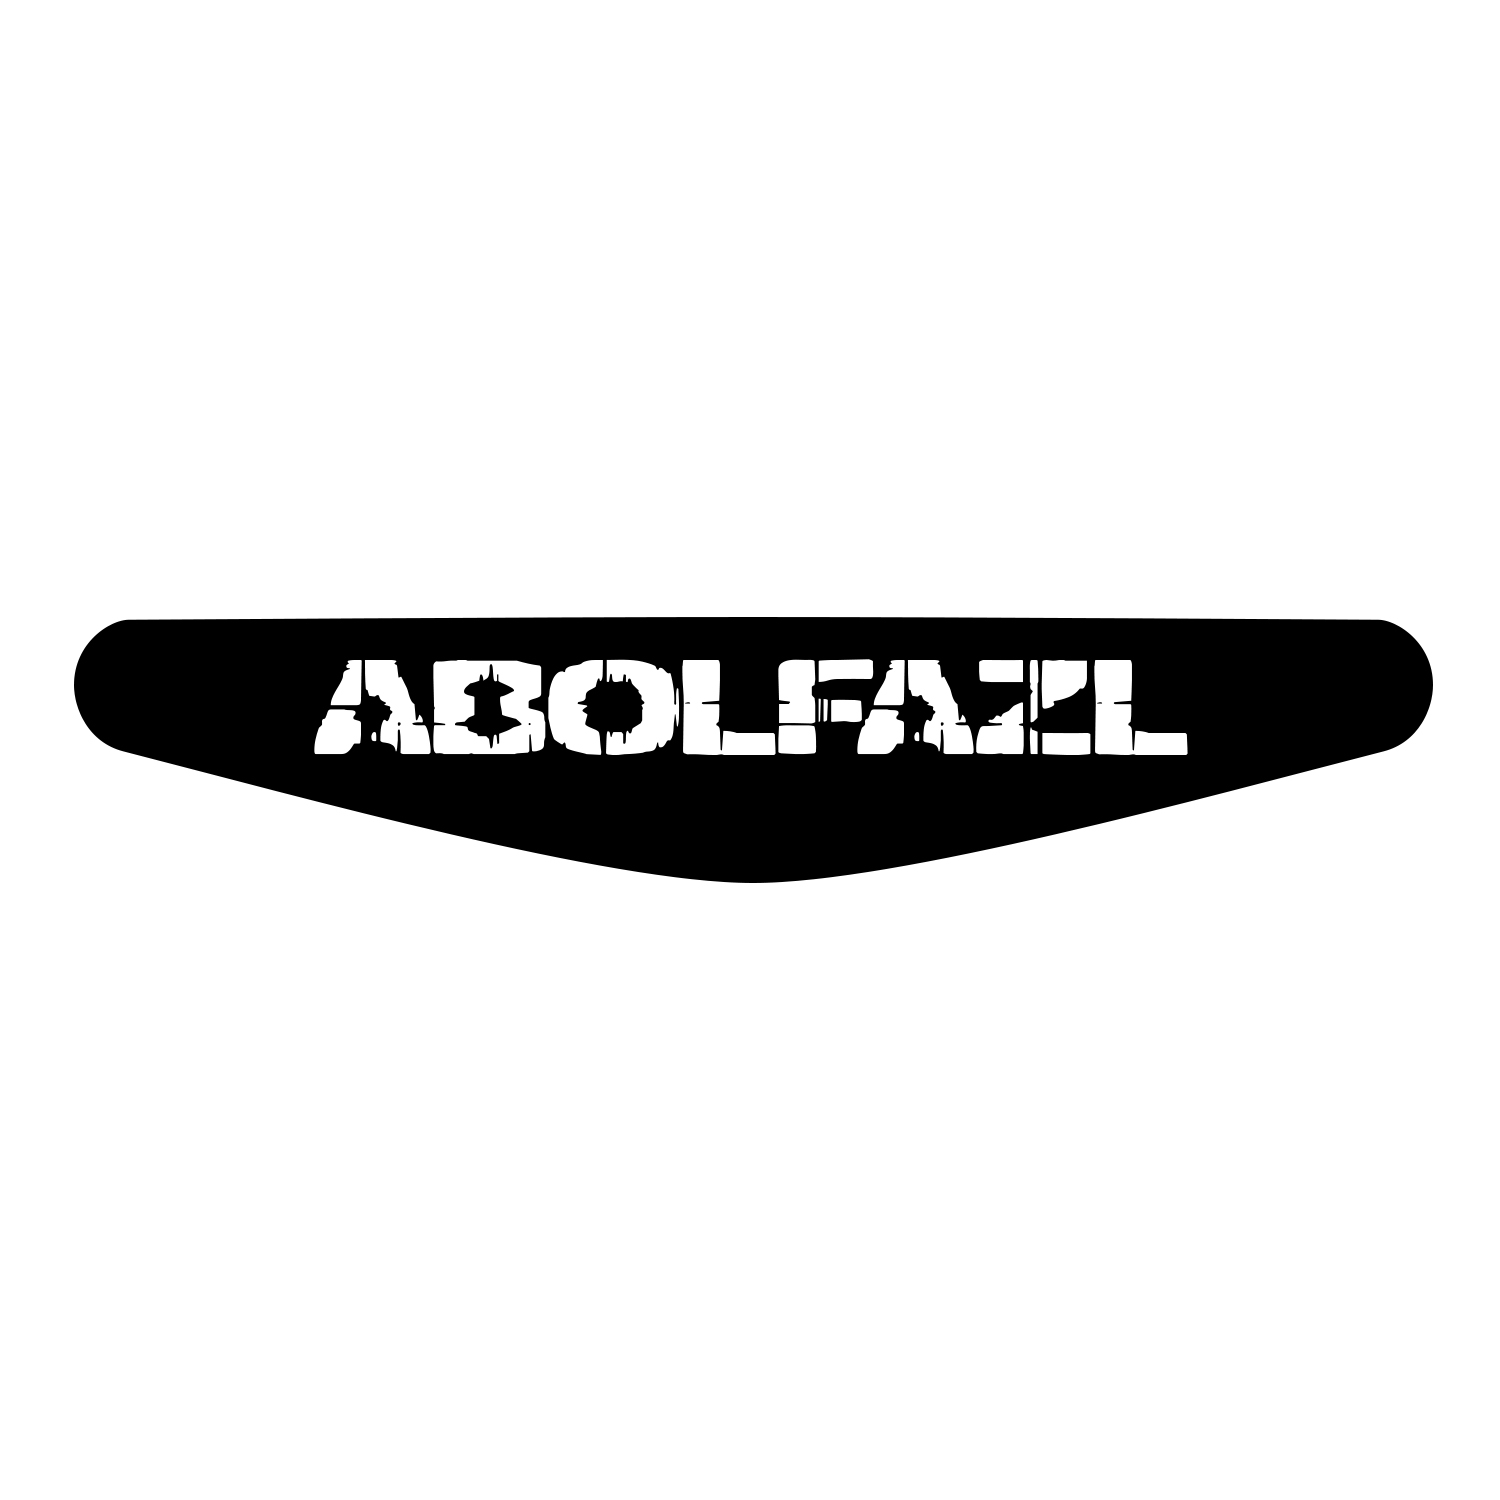 برچسب لایت بار دسته پلی استیشن 4 ونسونی طرح Abolfazl